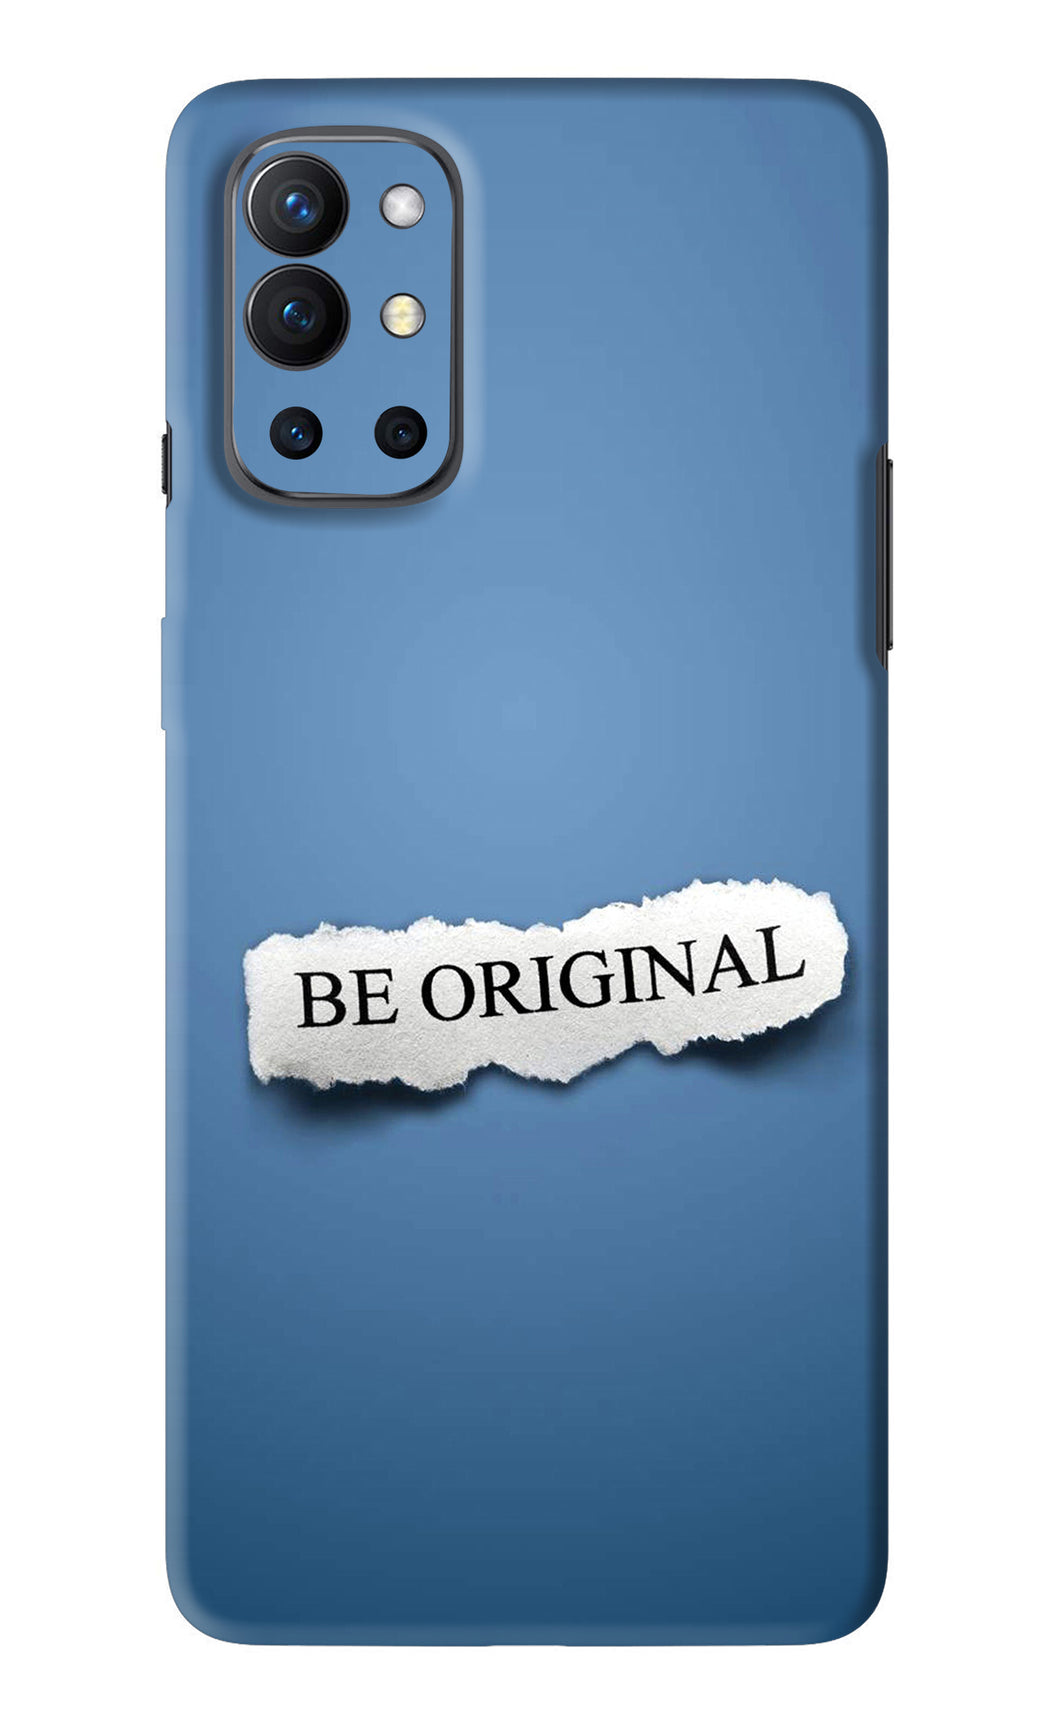 Be Original OnePlus 9R Back Skin Wrap